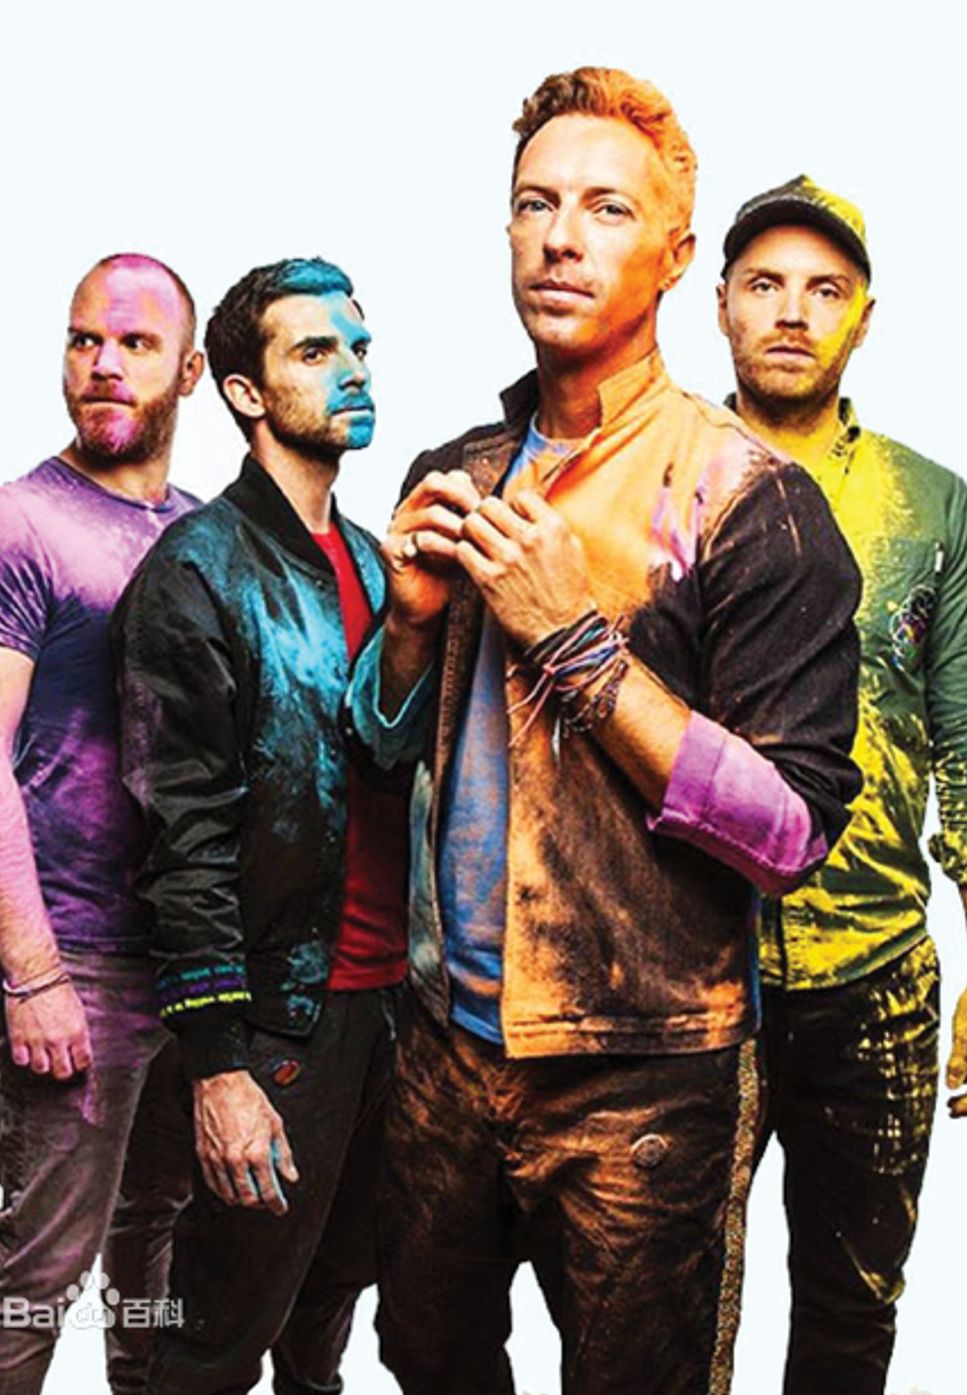 Avicii/Chris Martin/Guy Berryman/Jonny Buckland/Will Champion - A Sky Full of Stars (Coldplay - For Piano Solo) by poon